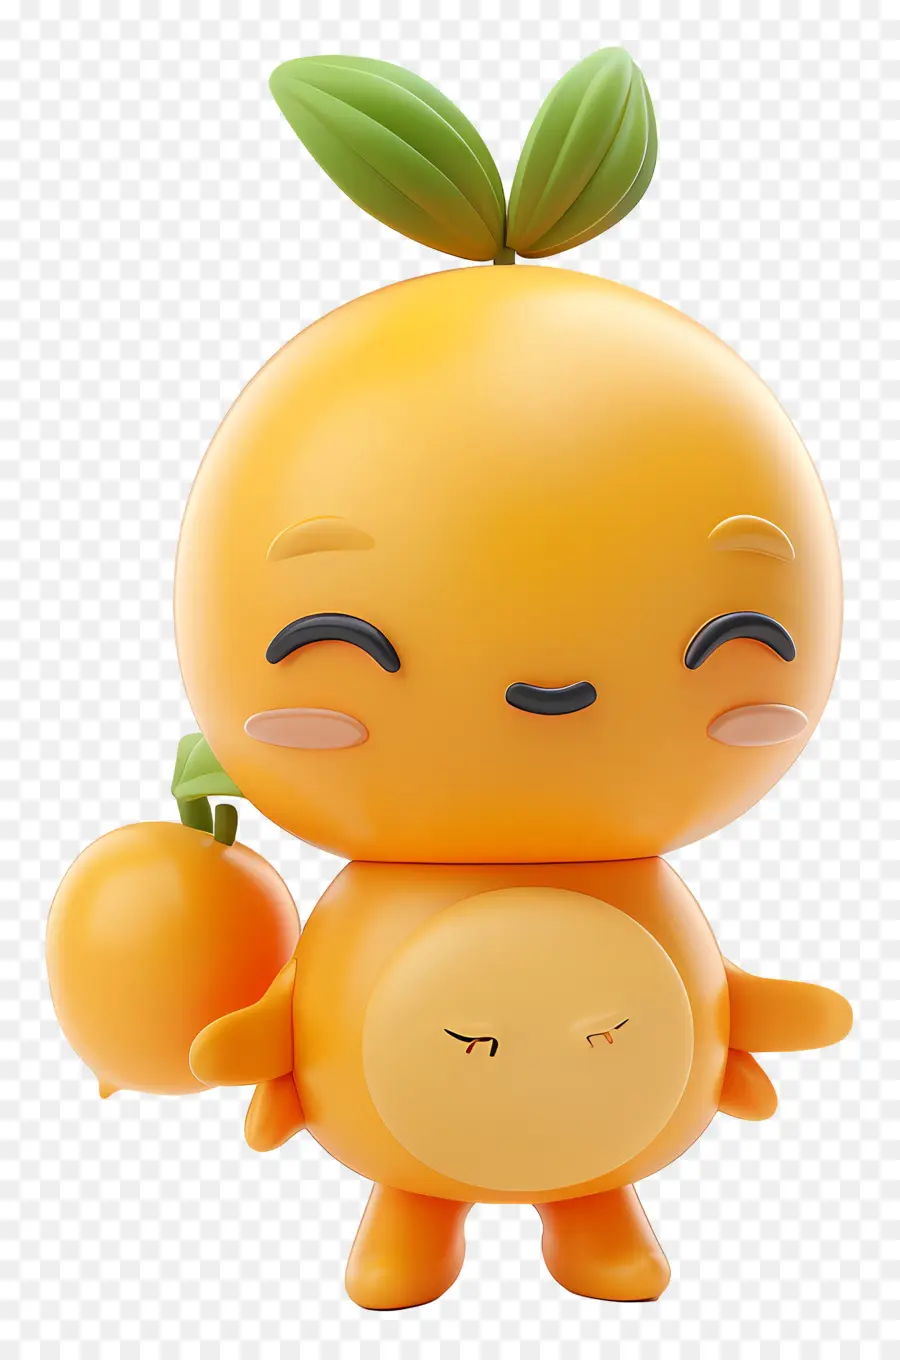 smiley Gesicht - Smiley orange Charakter hält geschnittene Apfelfigur